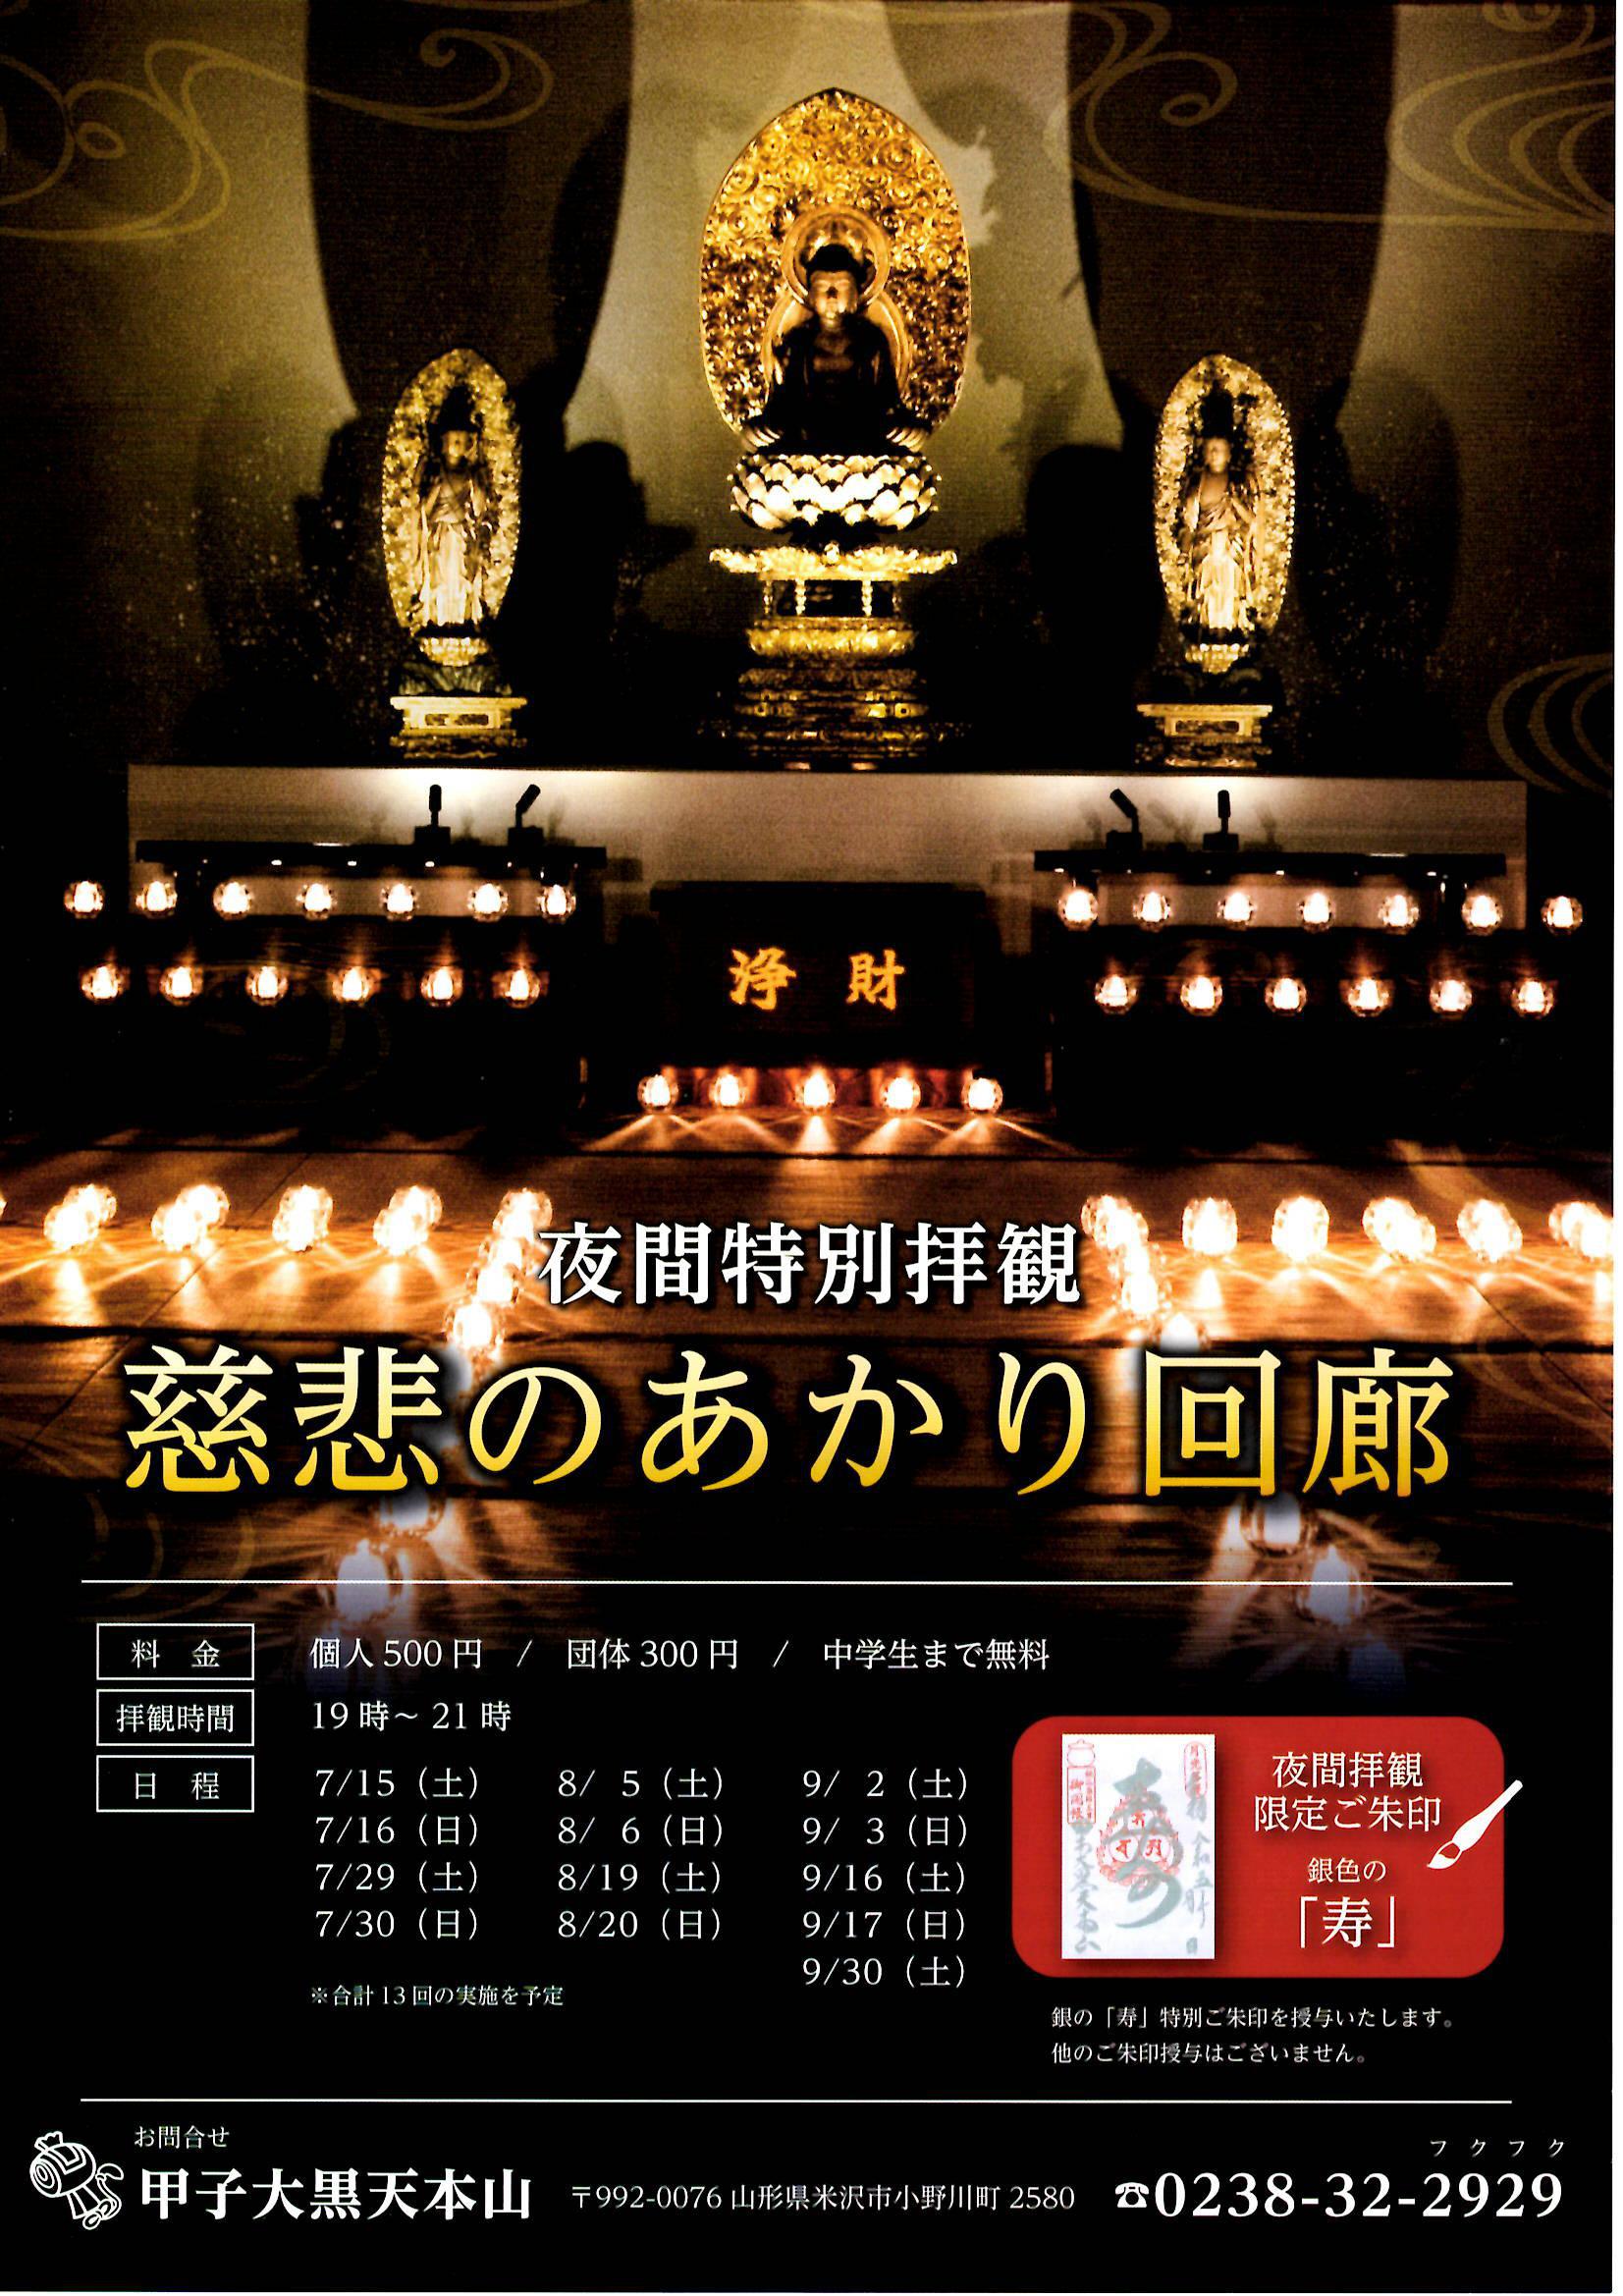 Public Showcase of the Hidden Yakushi Triad at Kinoene Daikokuten Honzan